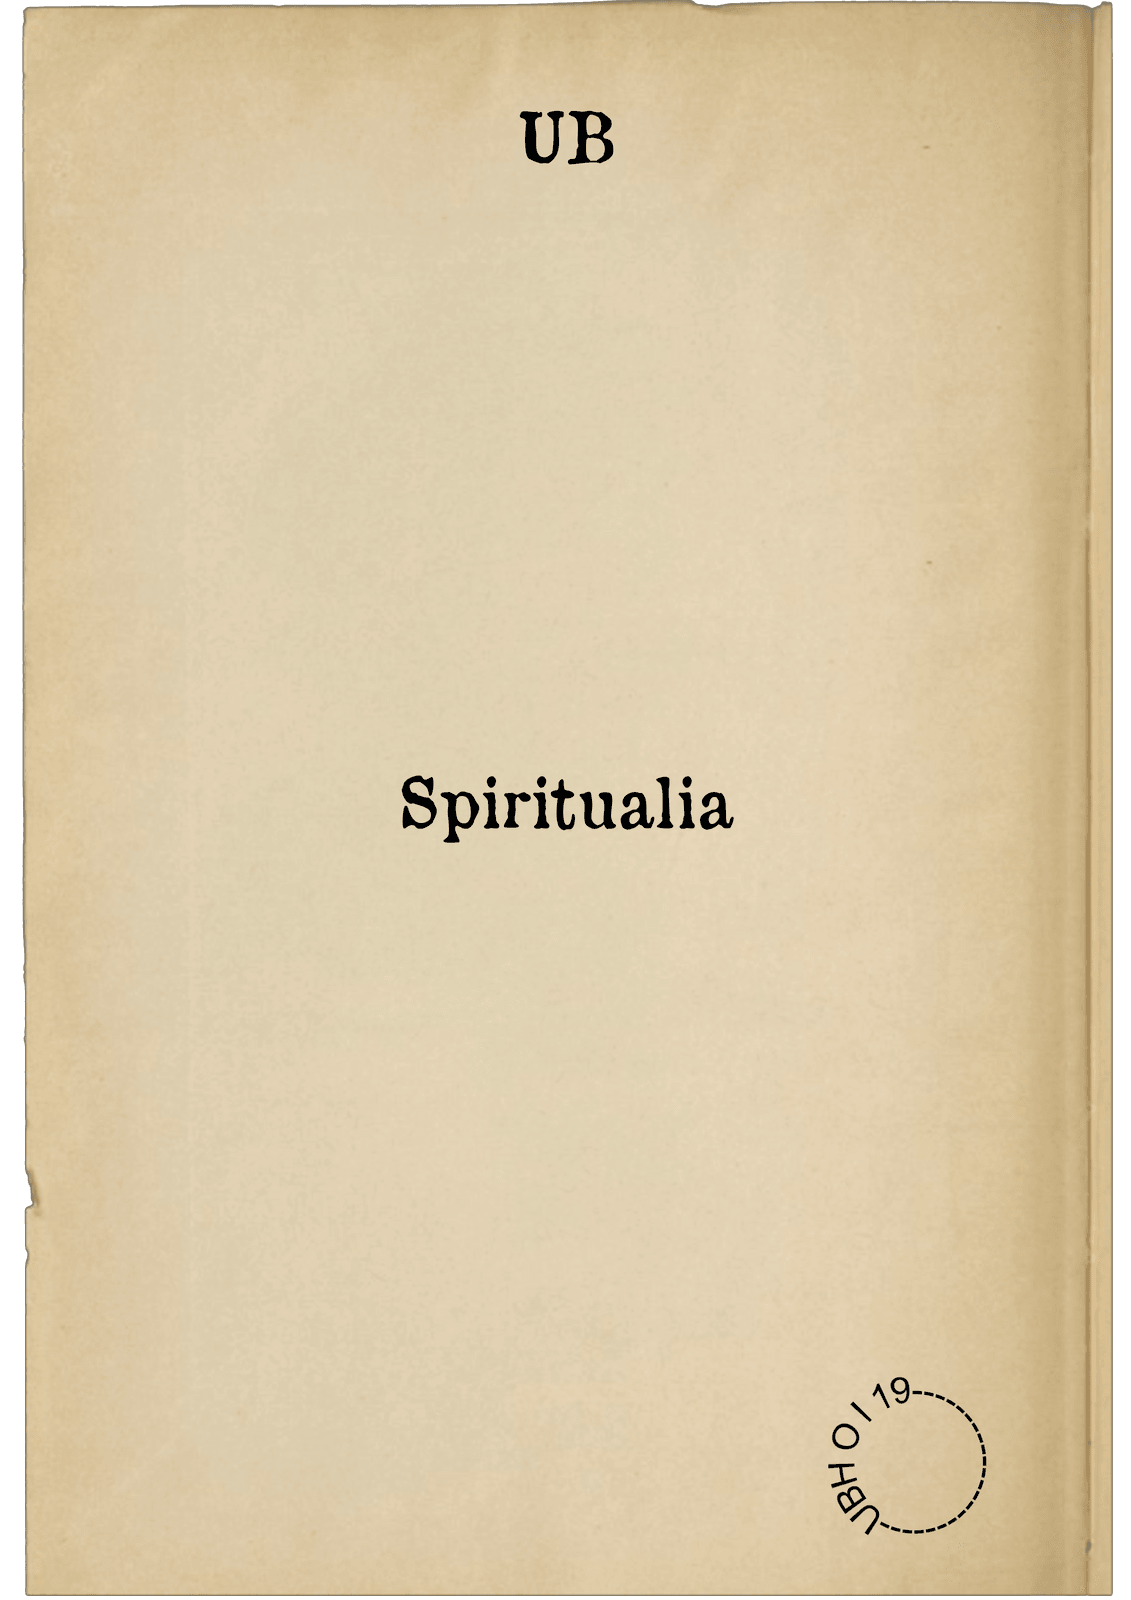 Spiritualia